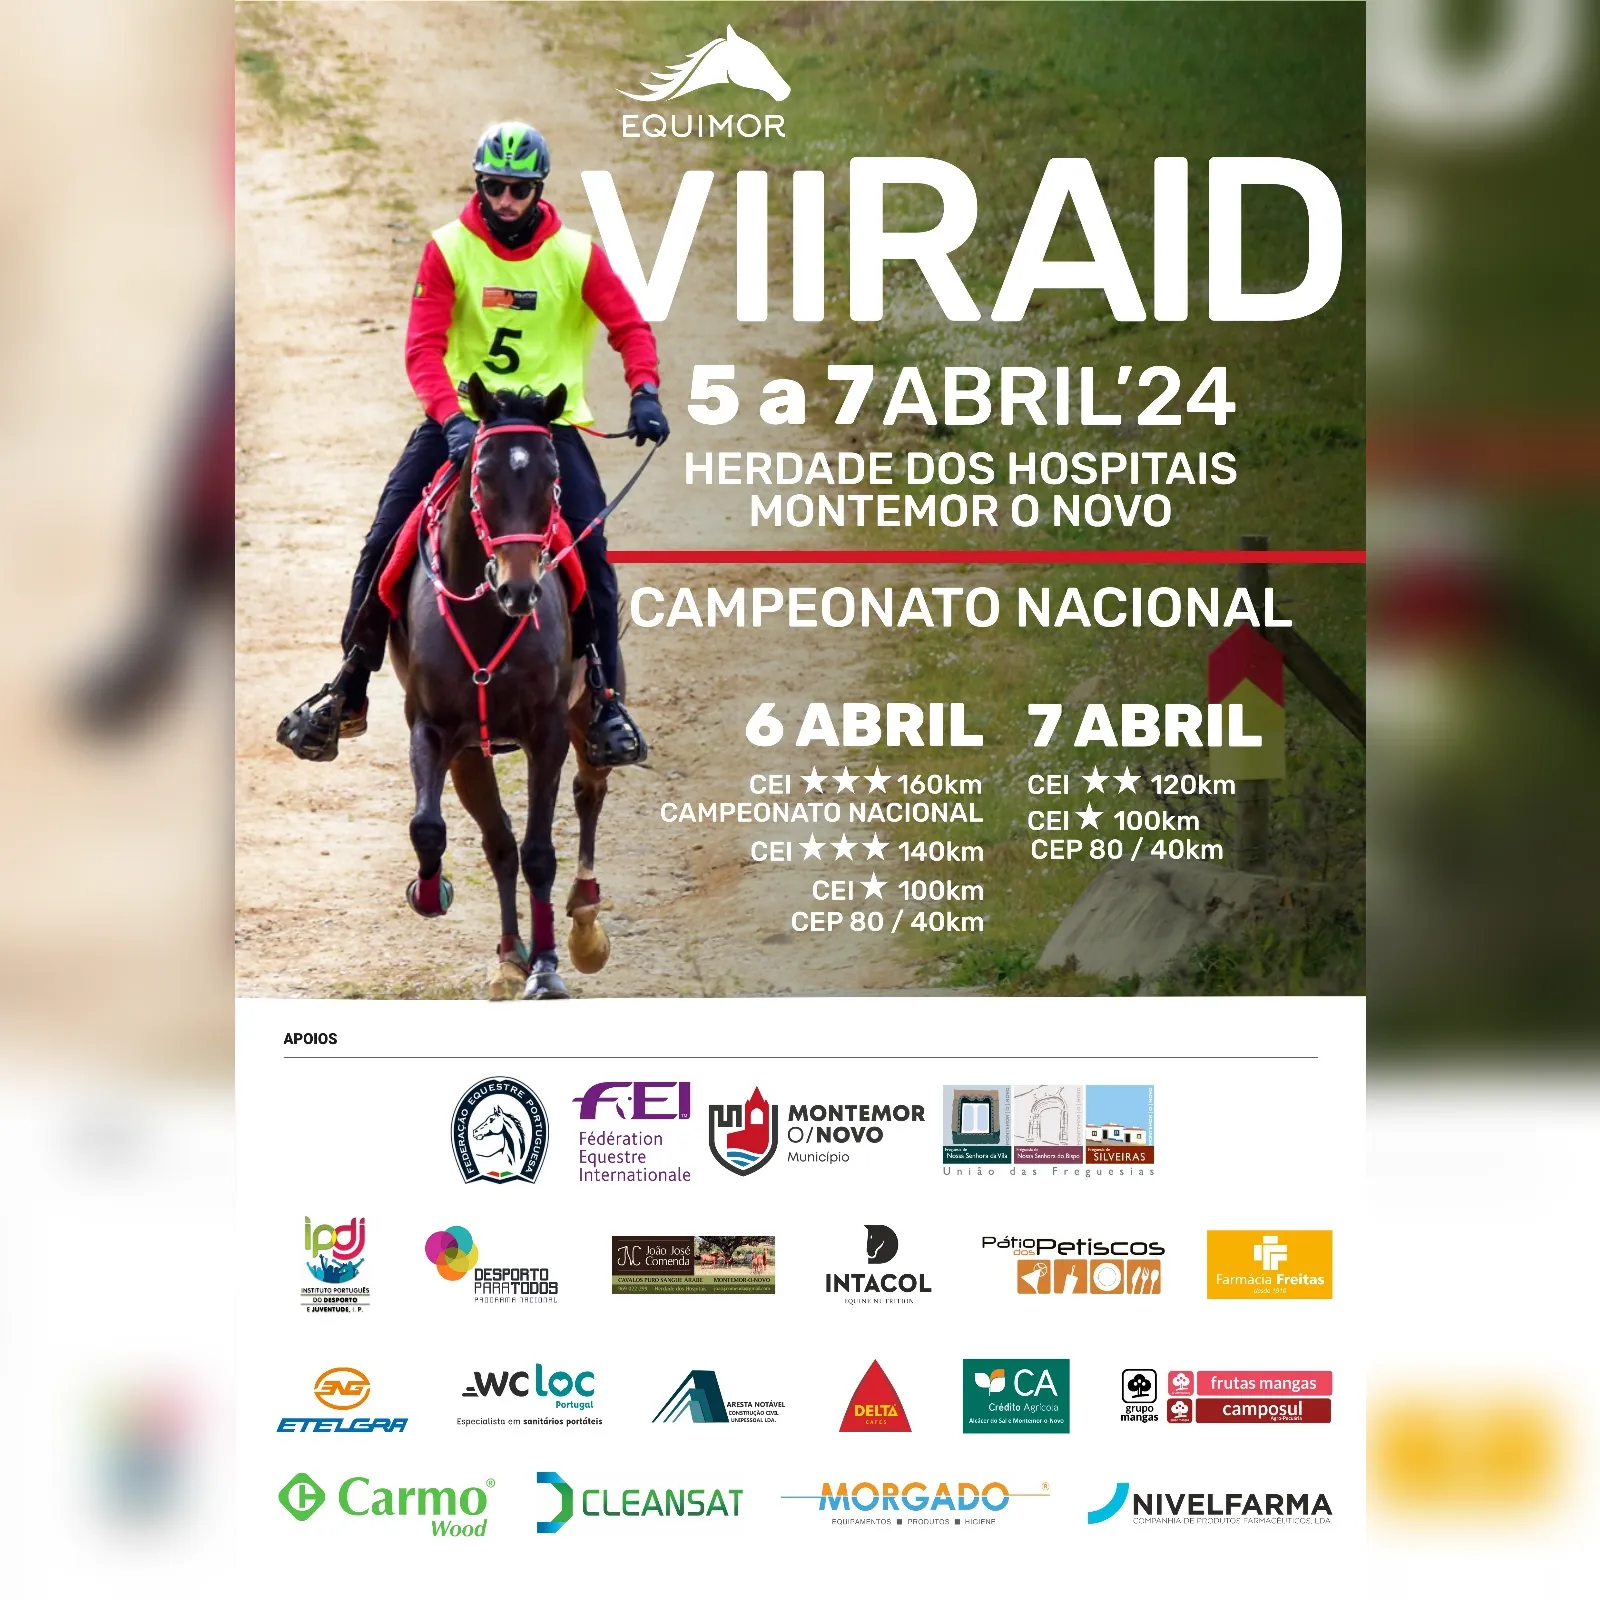 Poster of VII Raid Montemor o Novo Campeonato Nacional